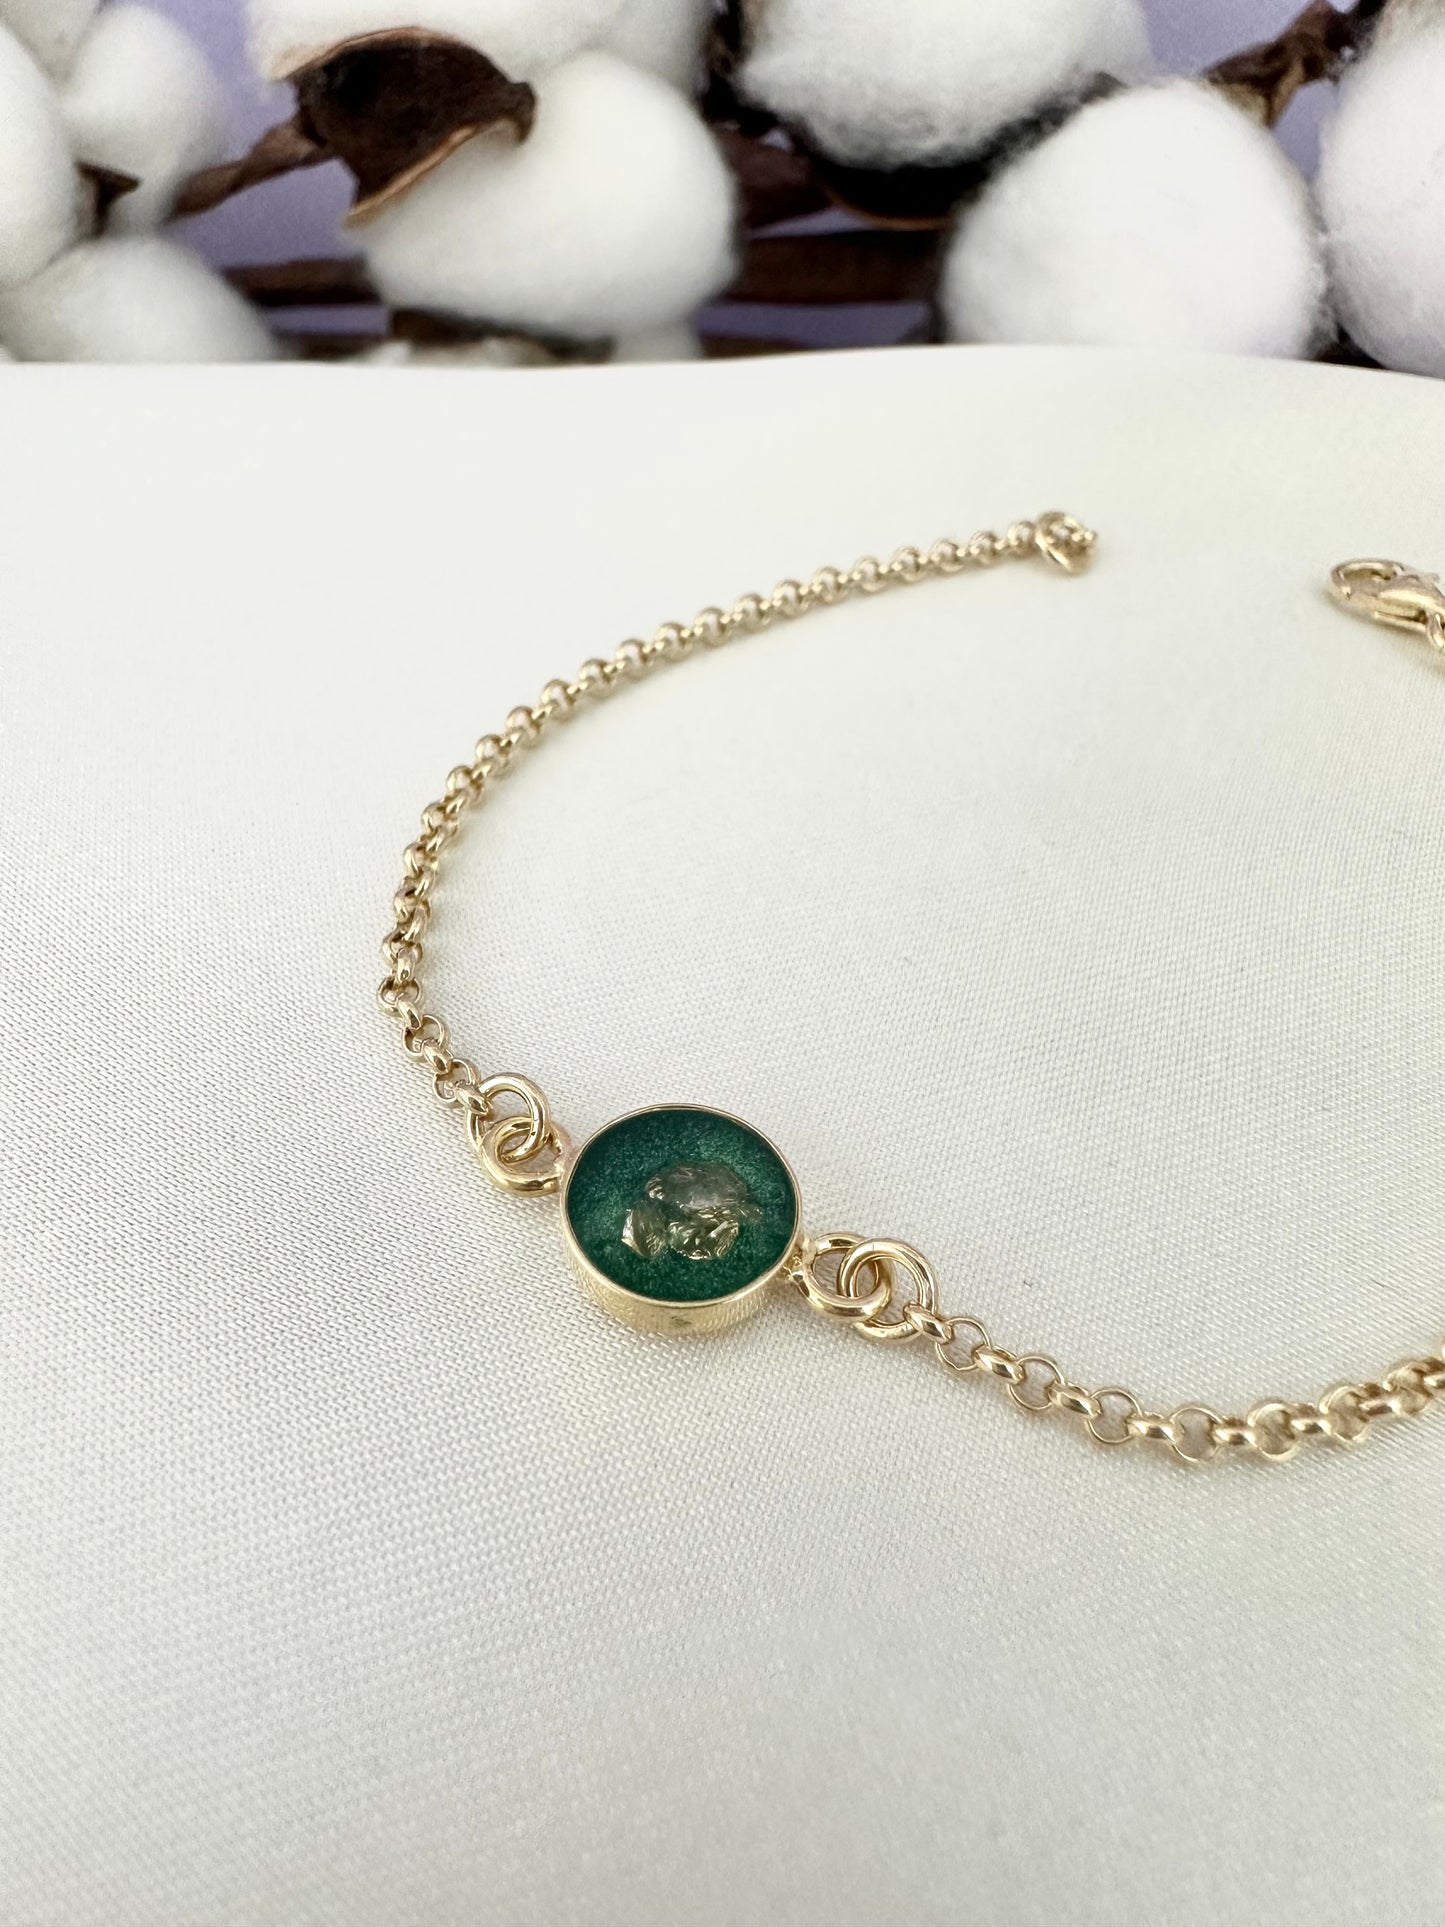 Bracelet with dark green pendant and golden stones